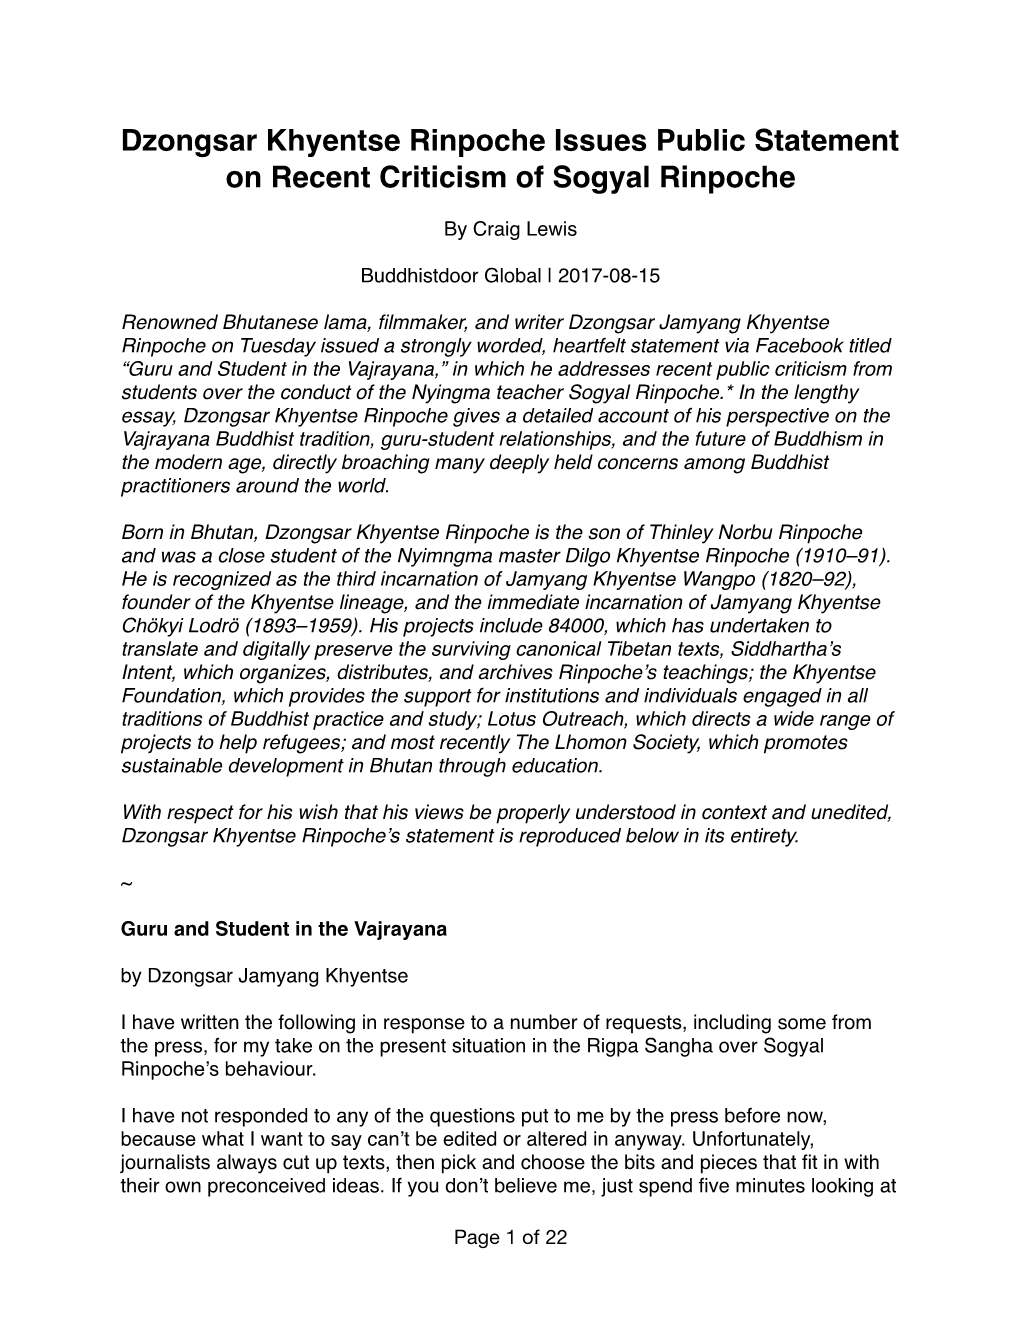 Dzongsar Khyentse Rinpoche Issues Public Statement on Recent Criticism of Sogyal Rinpoche